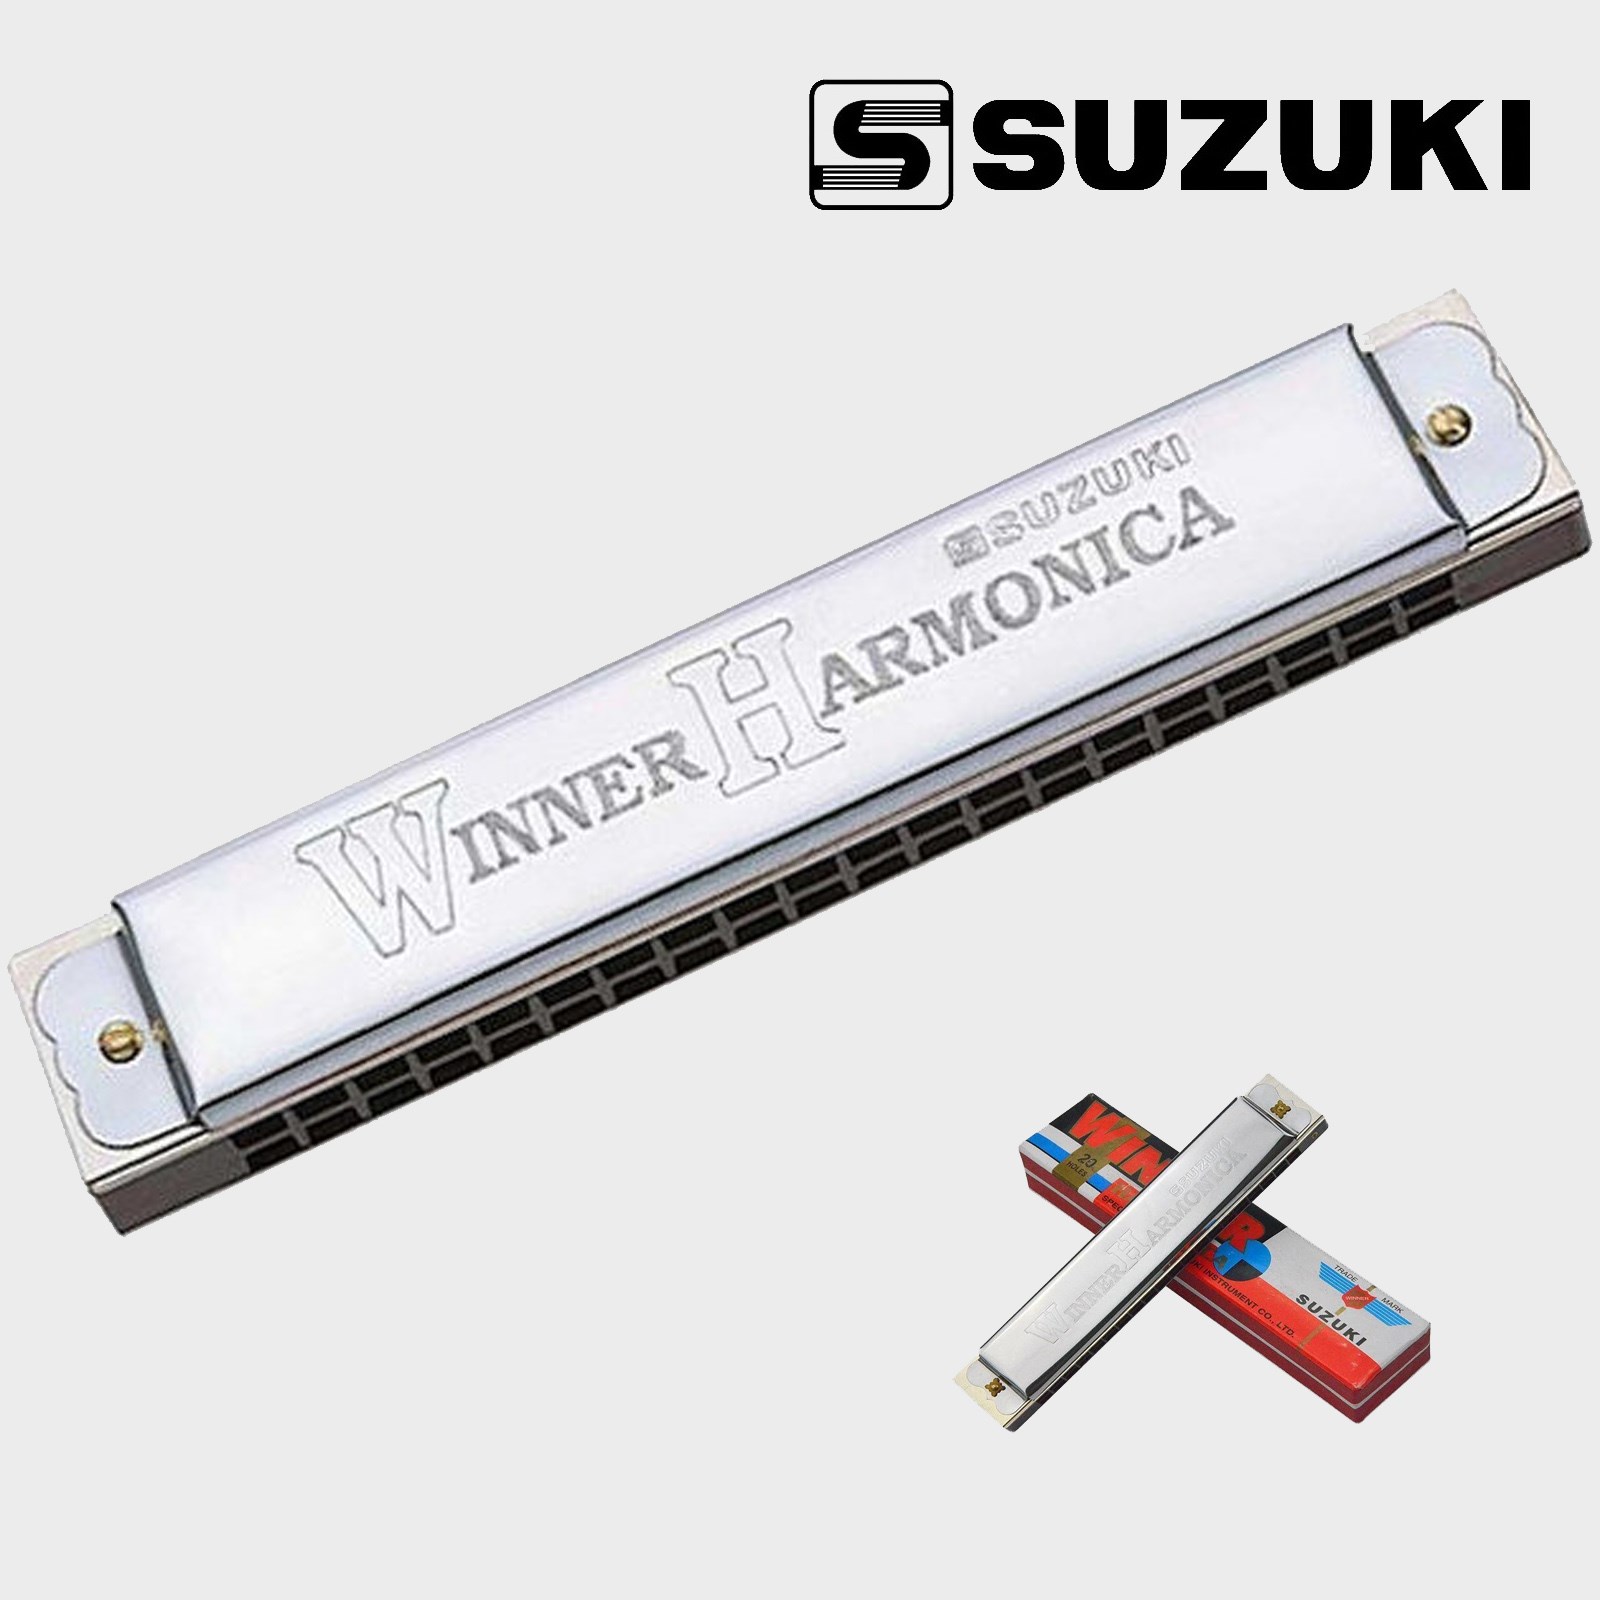 suzuki winner 20 hole tremolo harmonica